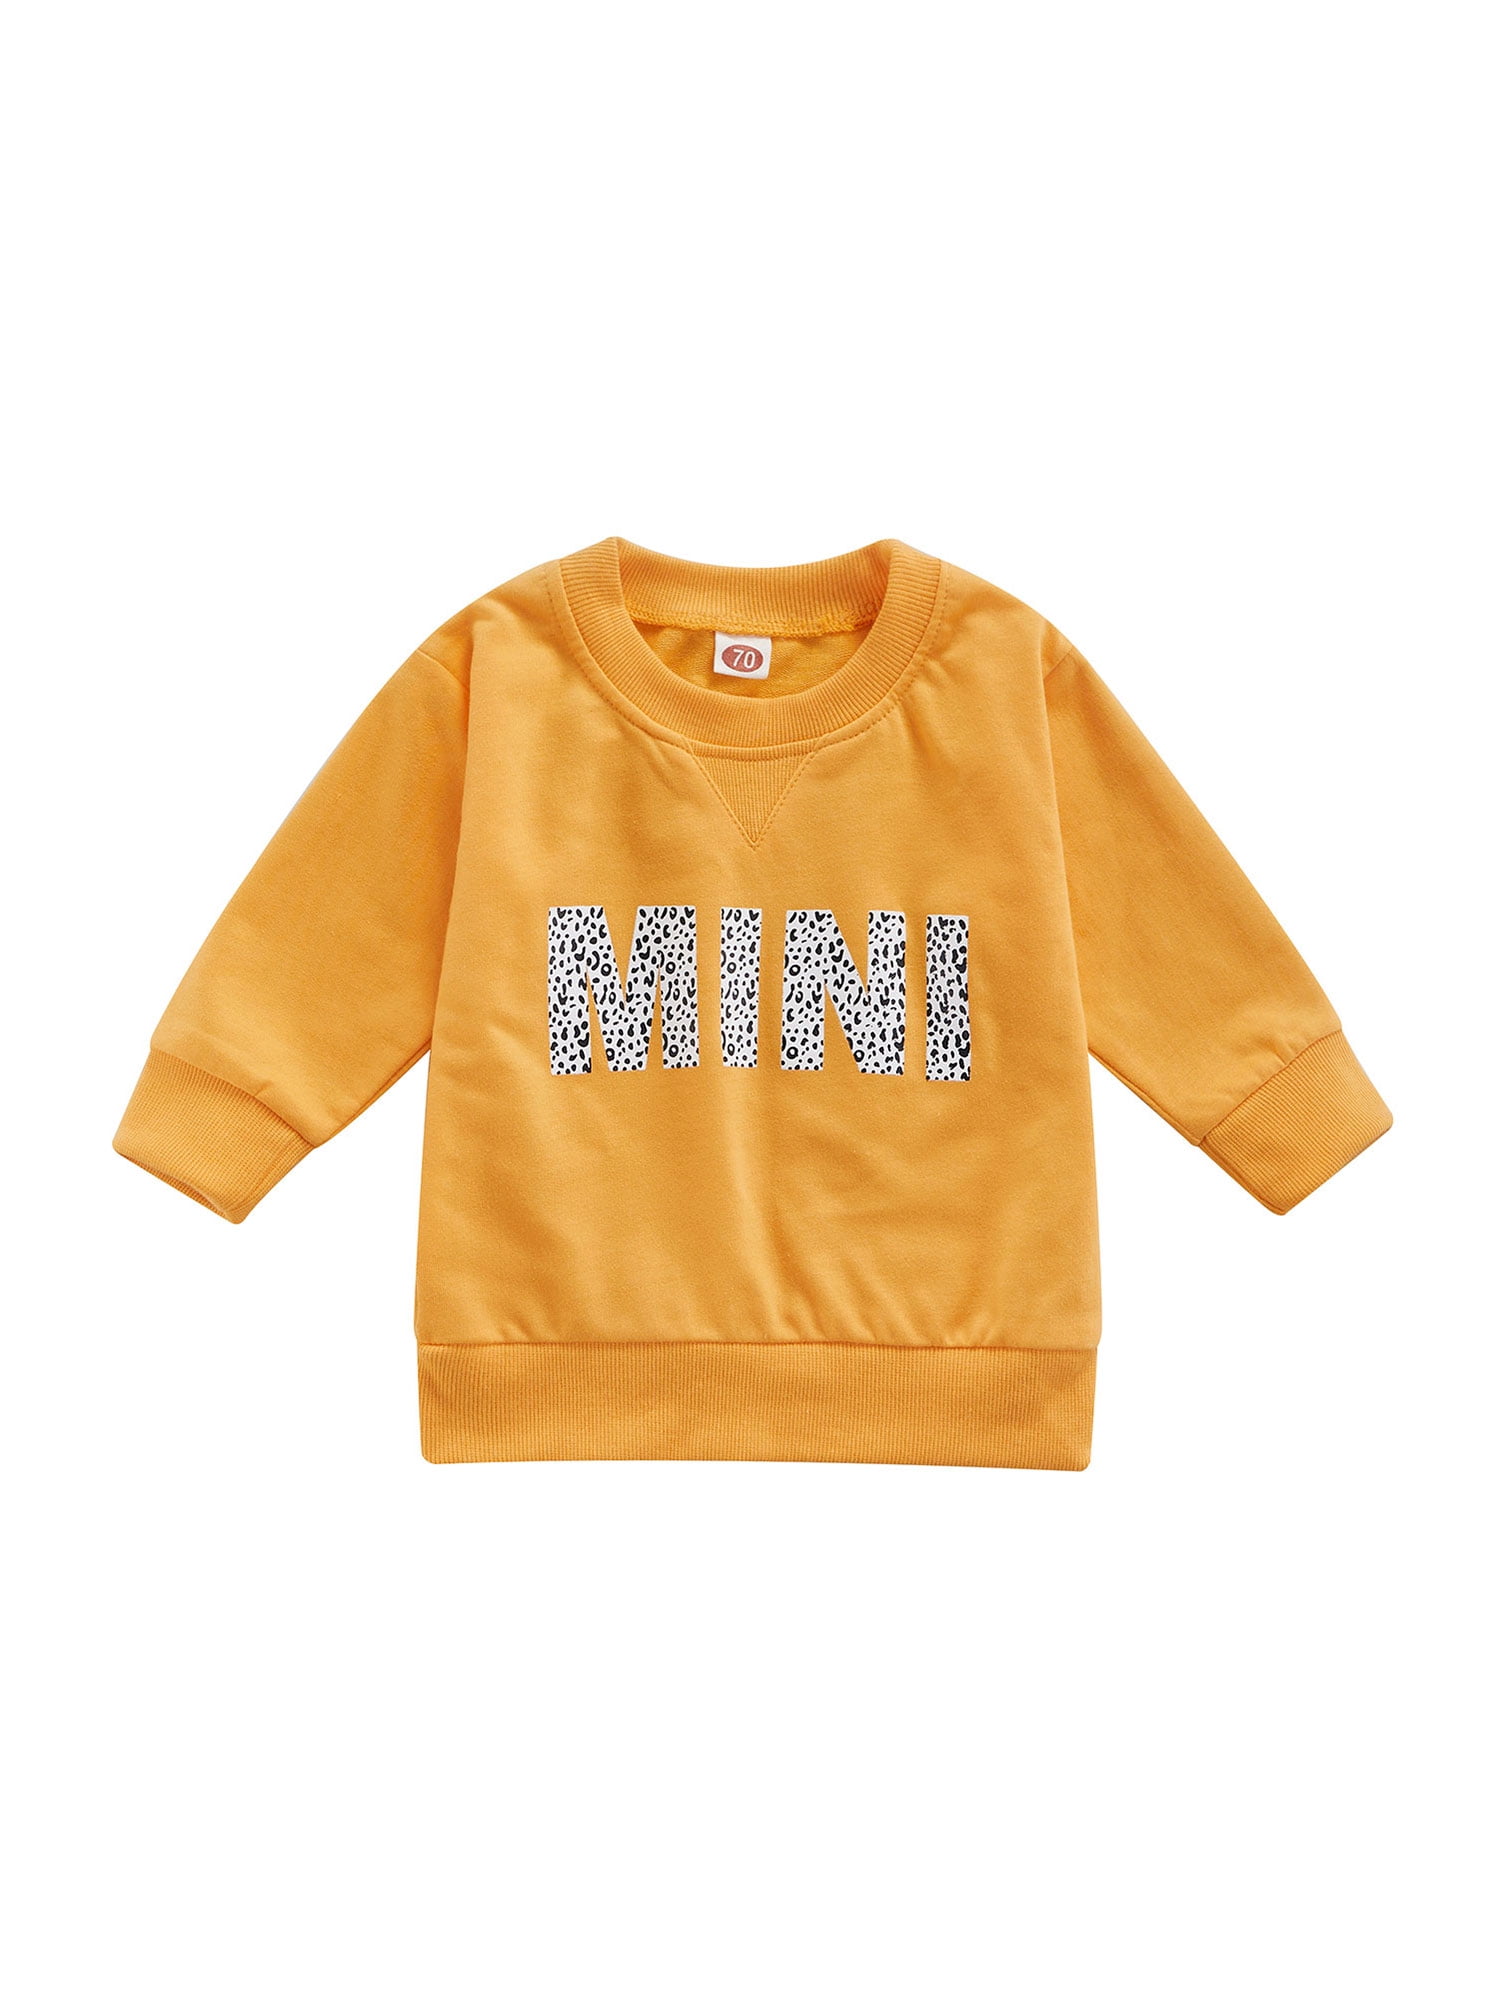 KIDS FASHION Jumpers & Sweatshirts Print discount 63% Navy Blue/Pink 12Y Roxy sweatshirt 